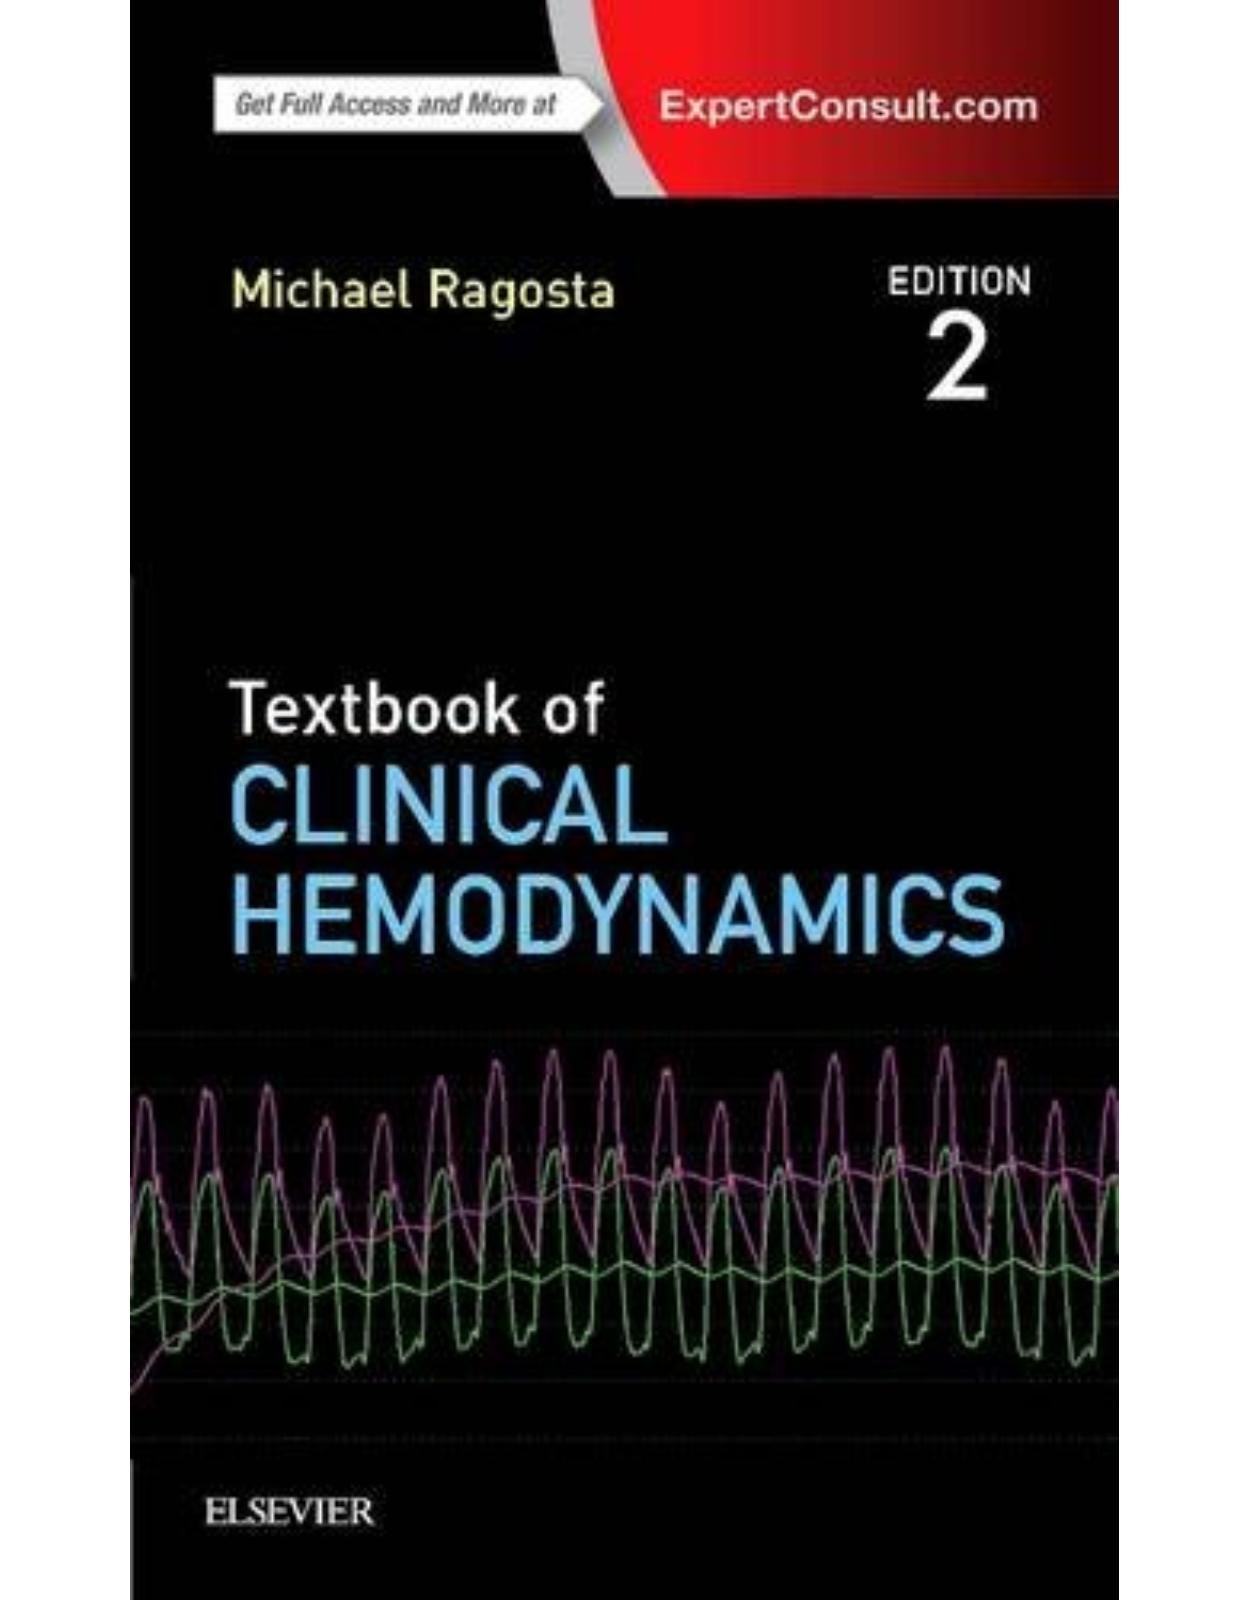 Textbook of Clinical Hemodynamics, 2nd Edition